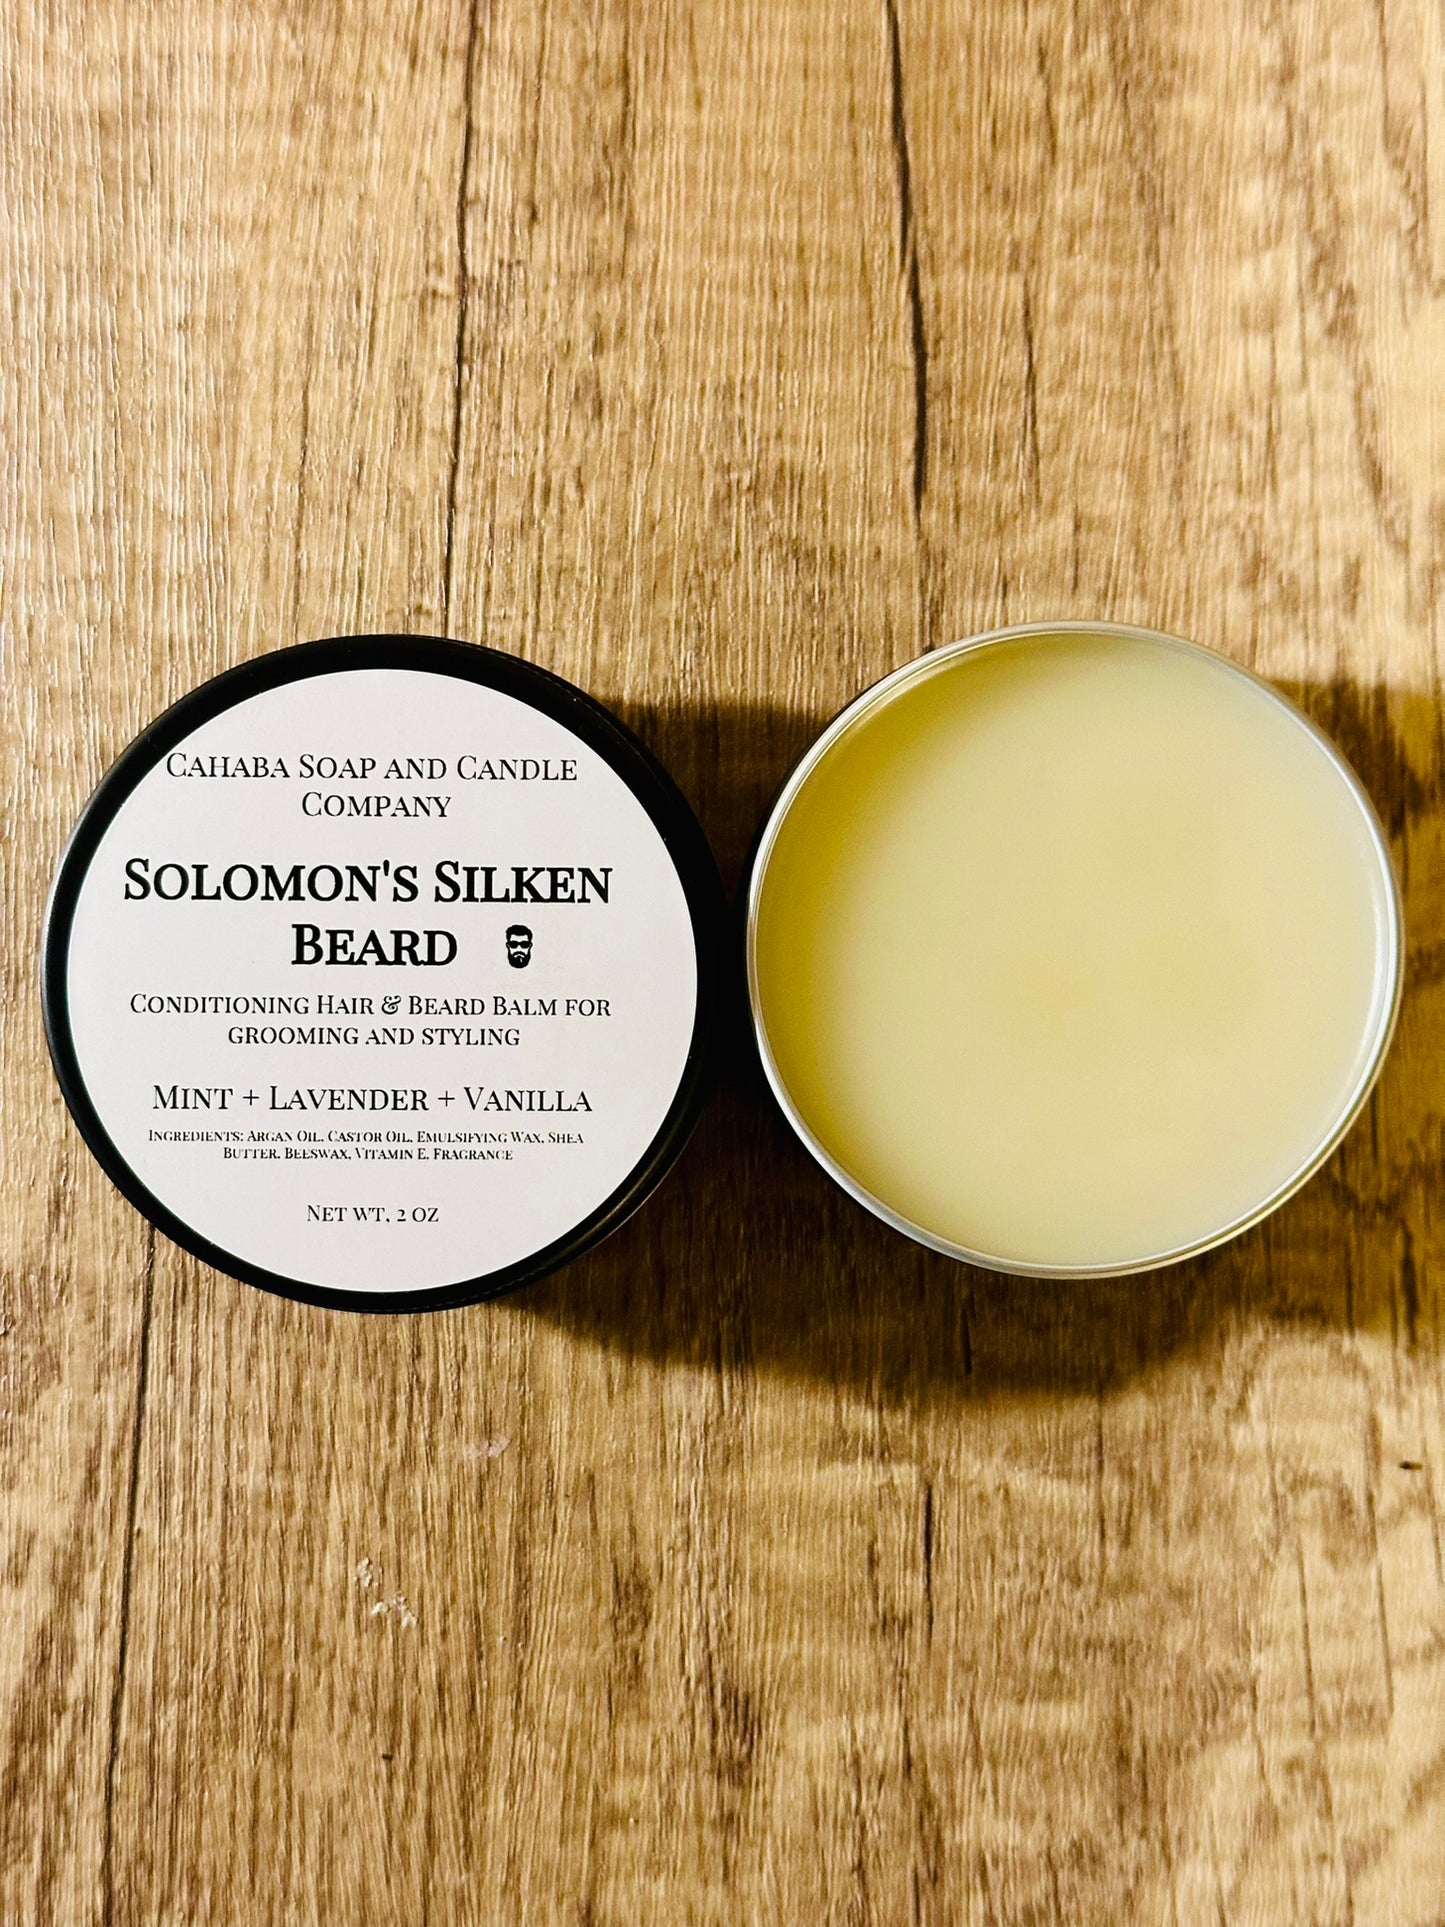 Hair and Beard Balm - Cahaba Soap and Candle Company